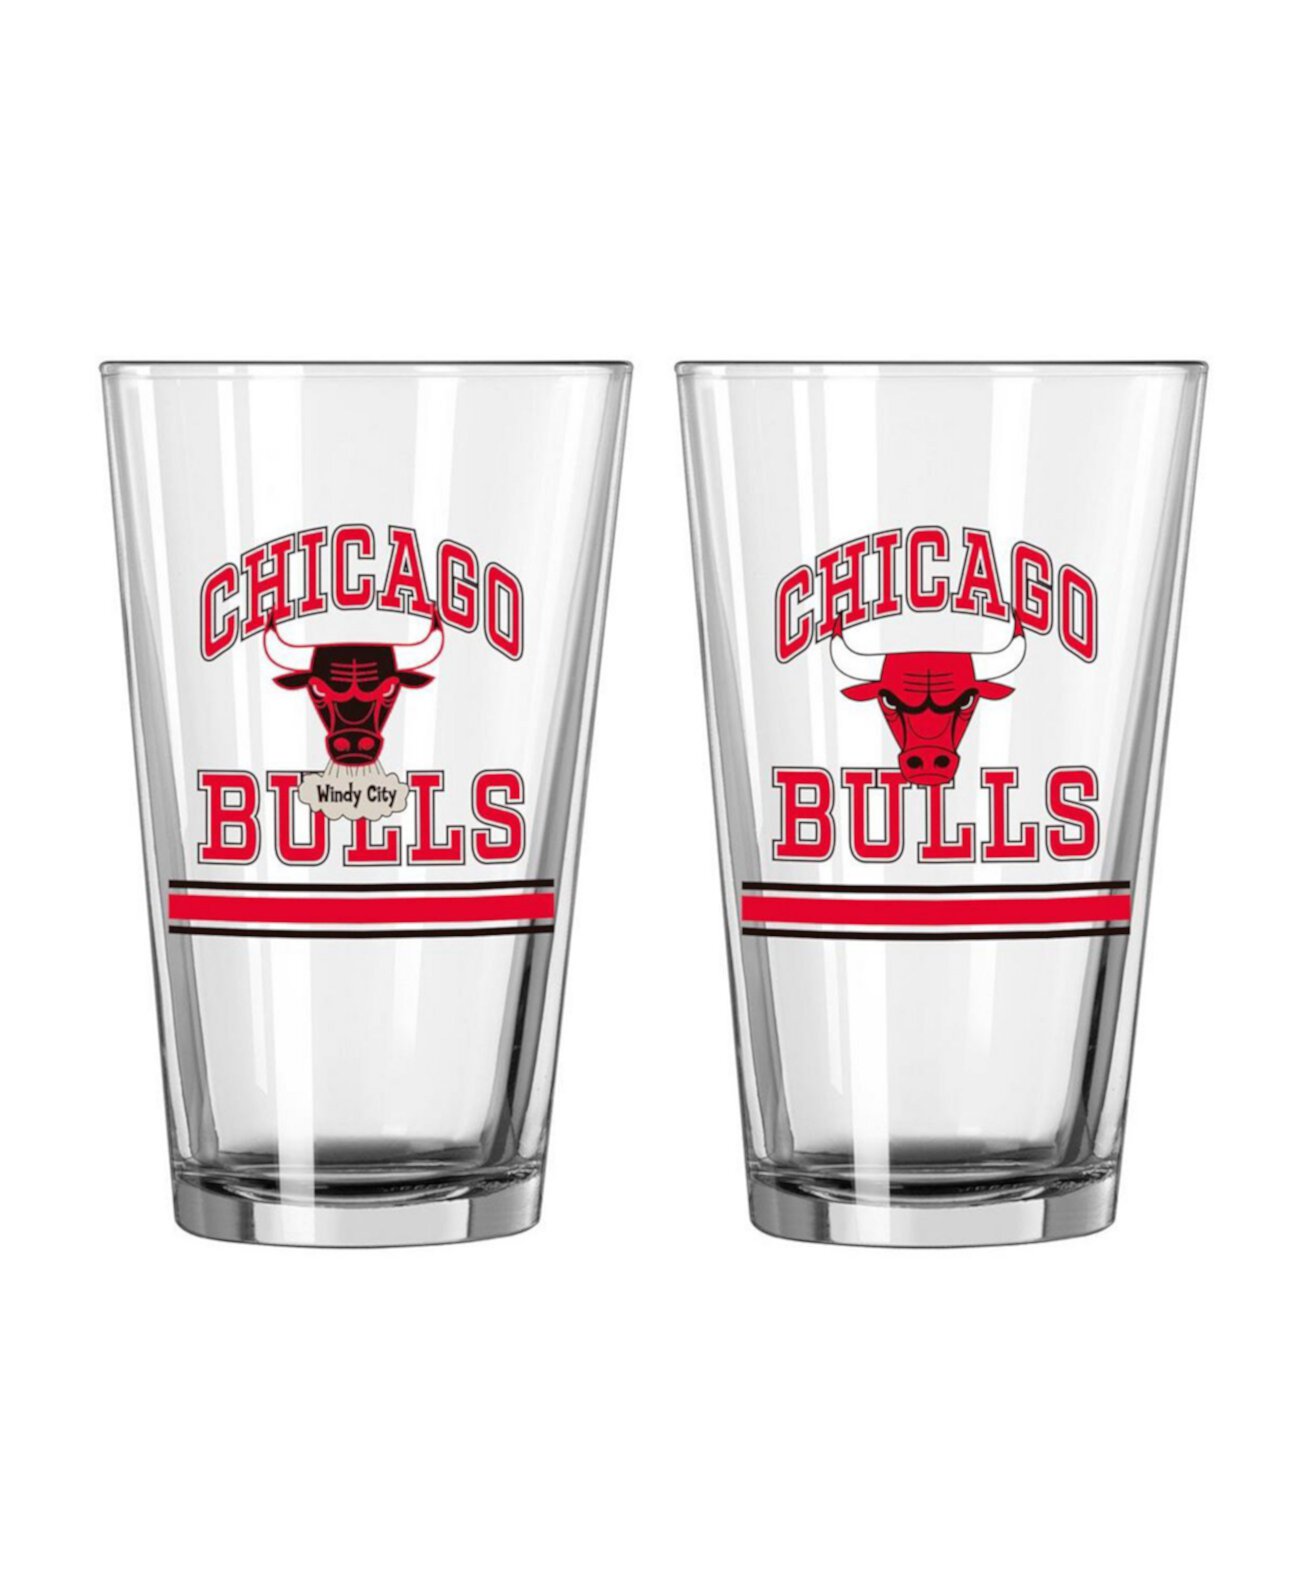 Chicago Bulls, две упаковки стаканов на 16 унций (пинта) Logo Brand